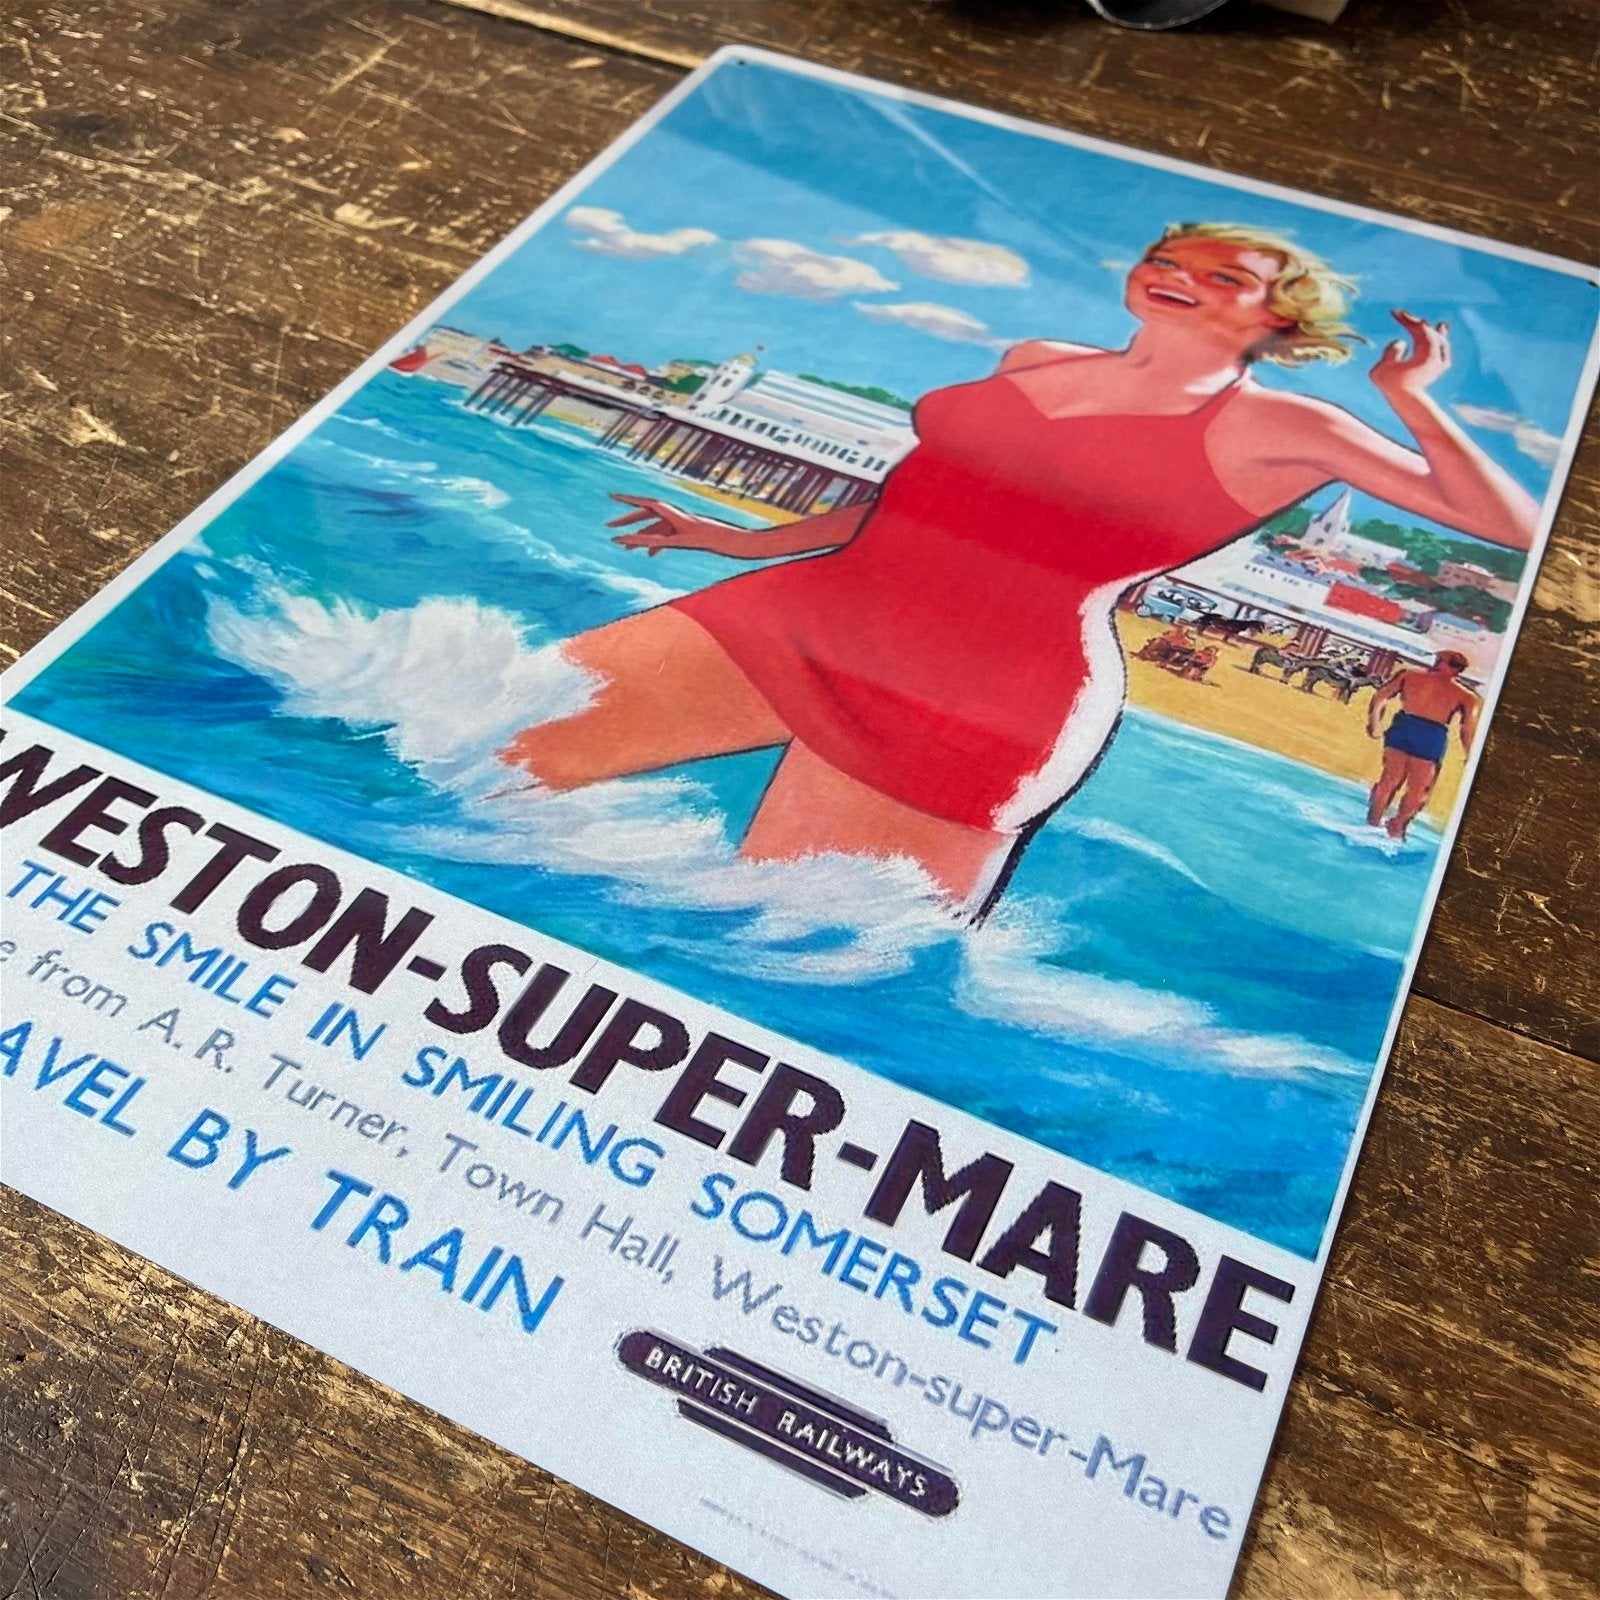 Vintage Metal Sign - British Railways Retro Advertising, Weston-Super-Mare, Somerset